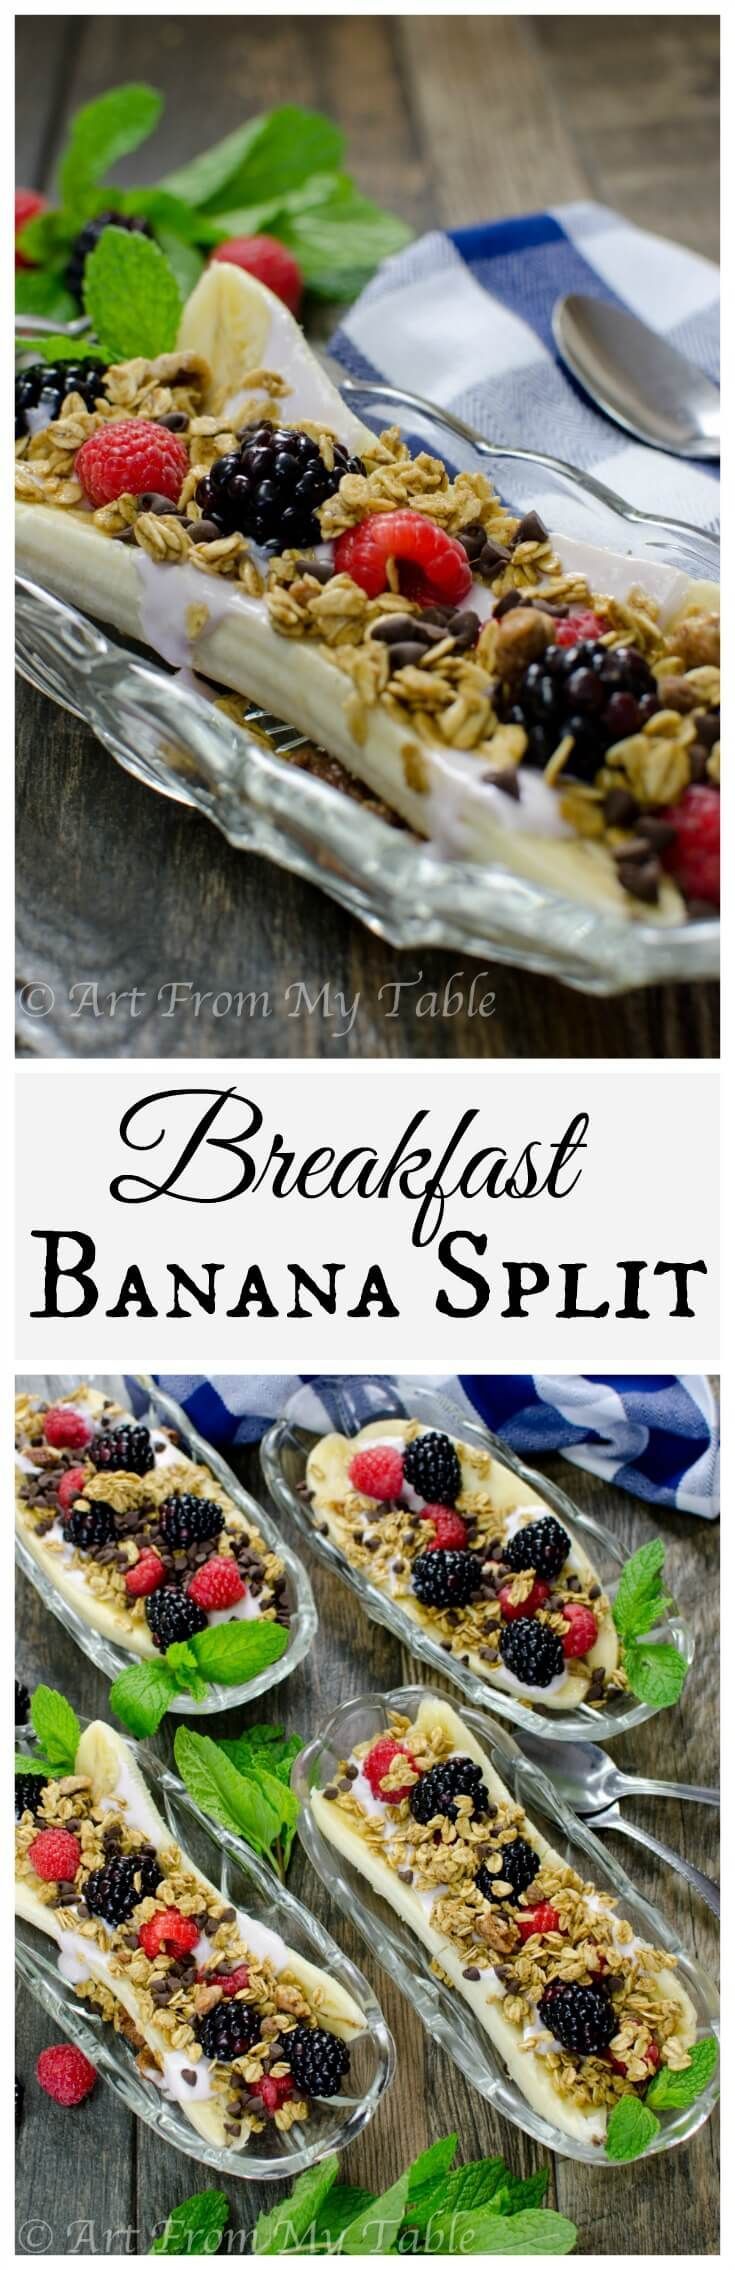 Breakfast Banana Split — banana, Greek yogurt, fresh fruit and granola. To make even healthier, use plain Greek yogurt and add